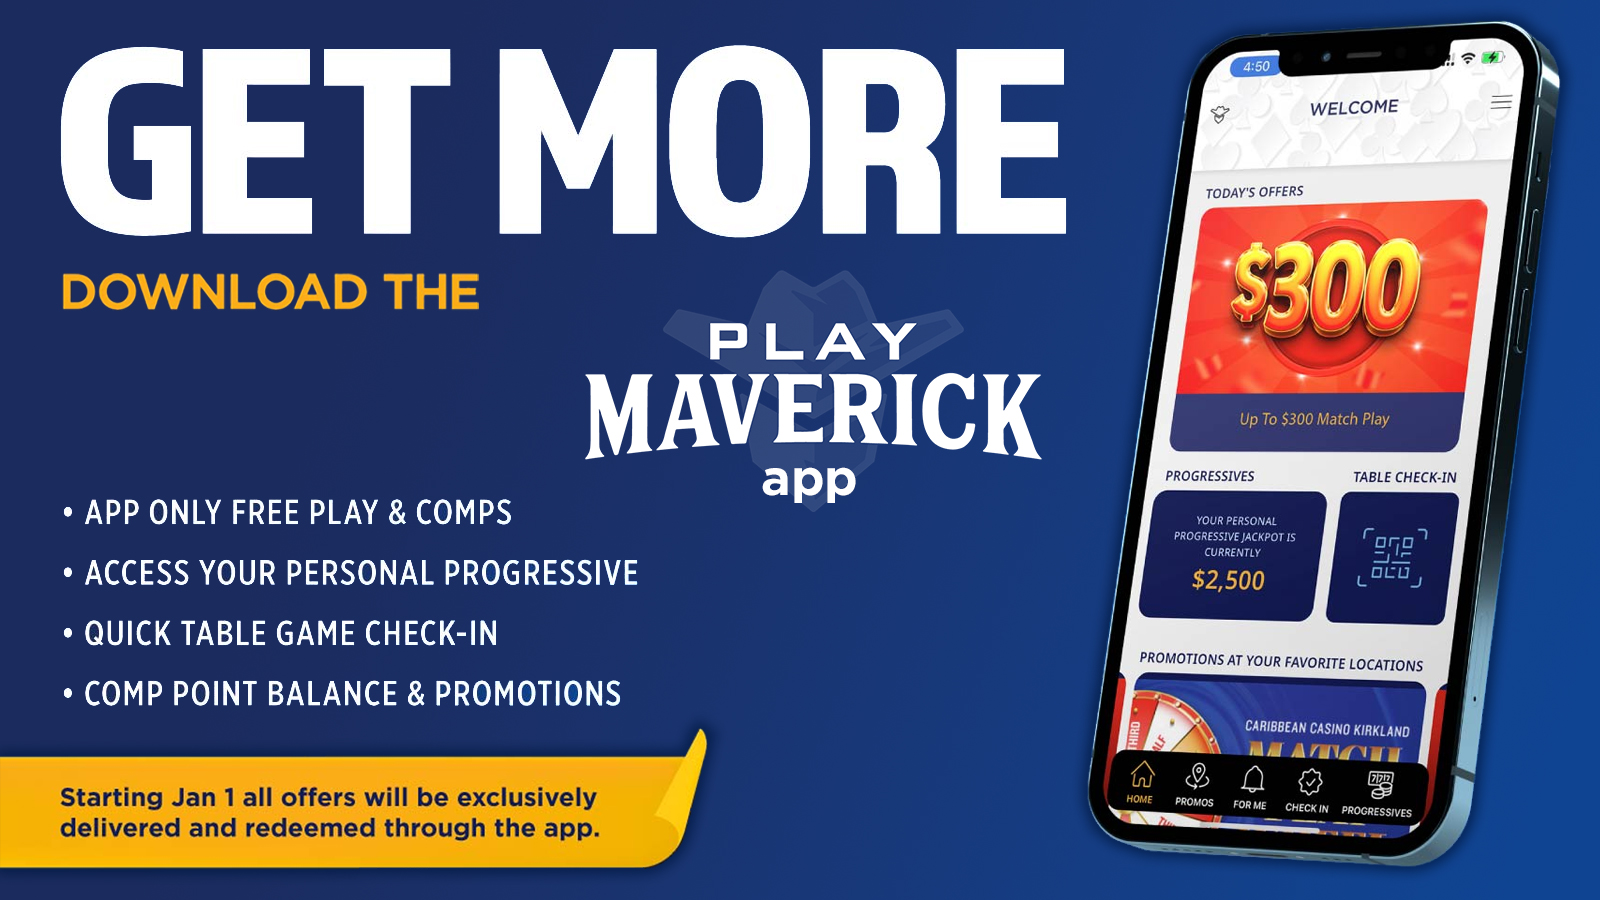 The Play Maverick App